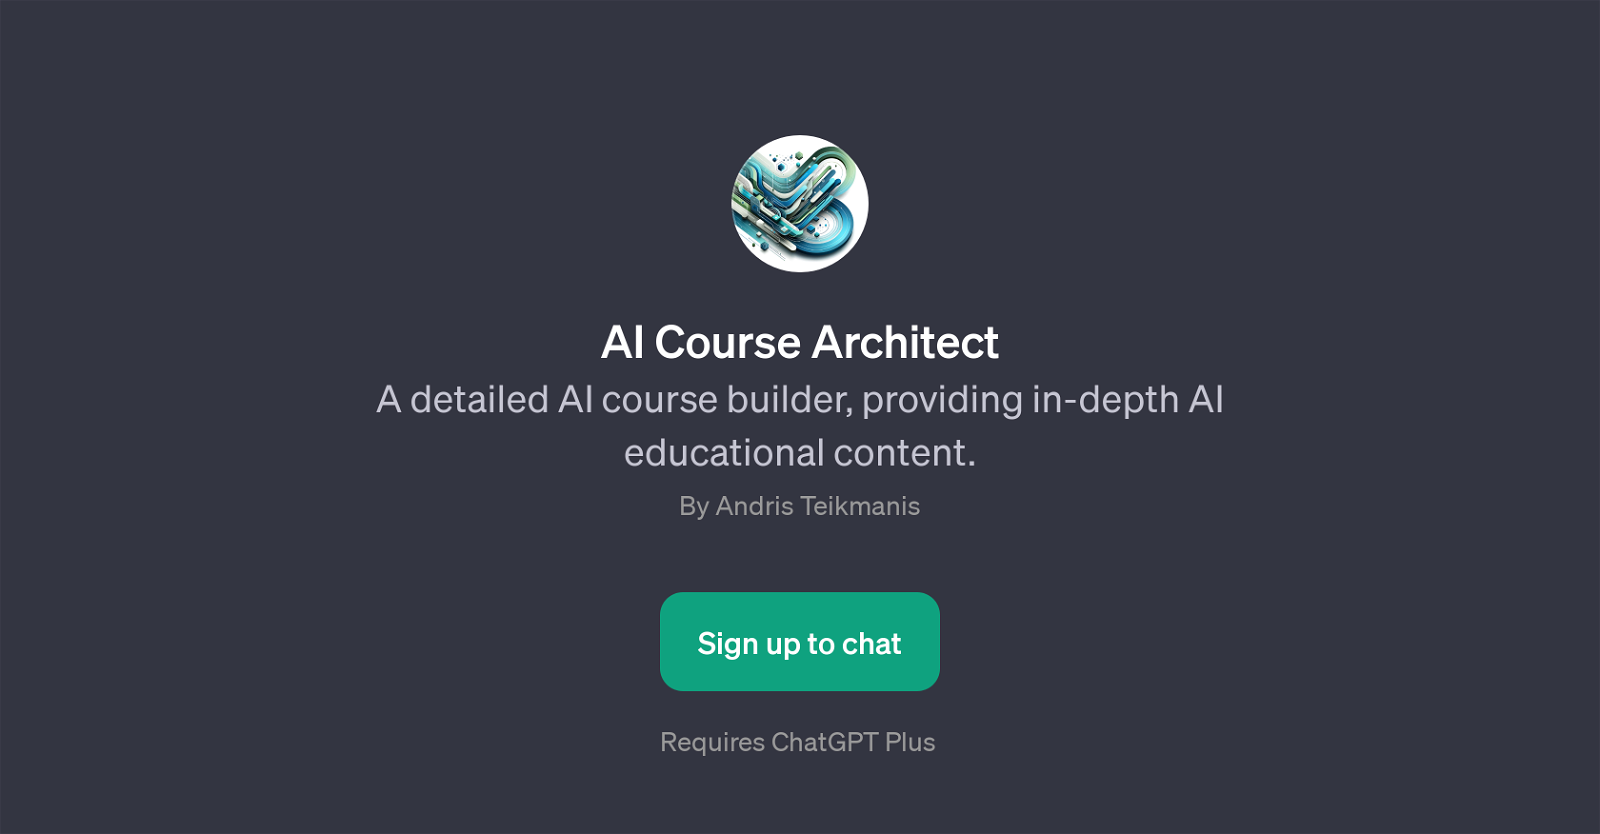 AI Course Architect website